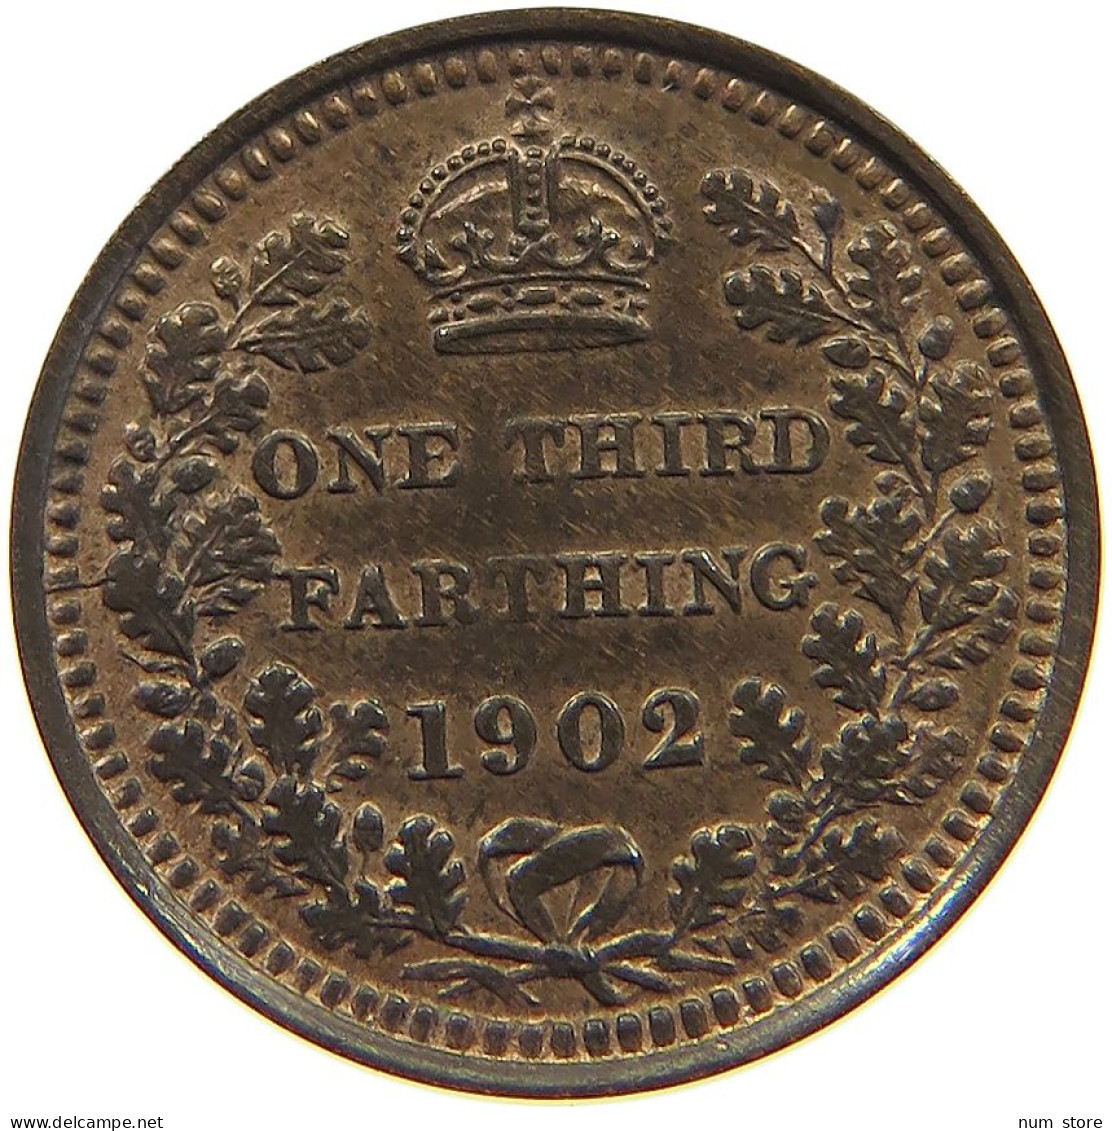 GREAT BRITAIN THIRD FARTHING 1902 Edward VII., 1901 - 1910 #t005 0377 - A. 1/4 - 1/3 - 1/2 Farthing